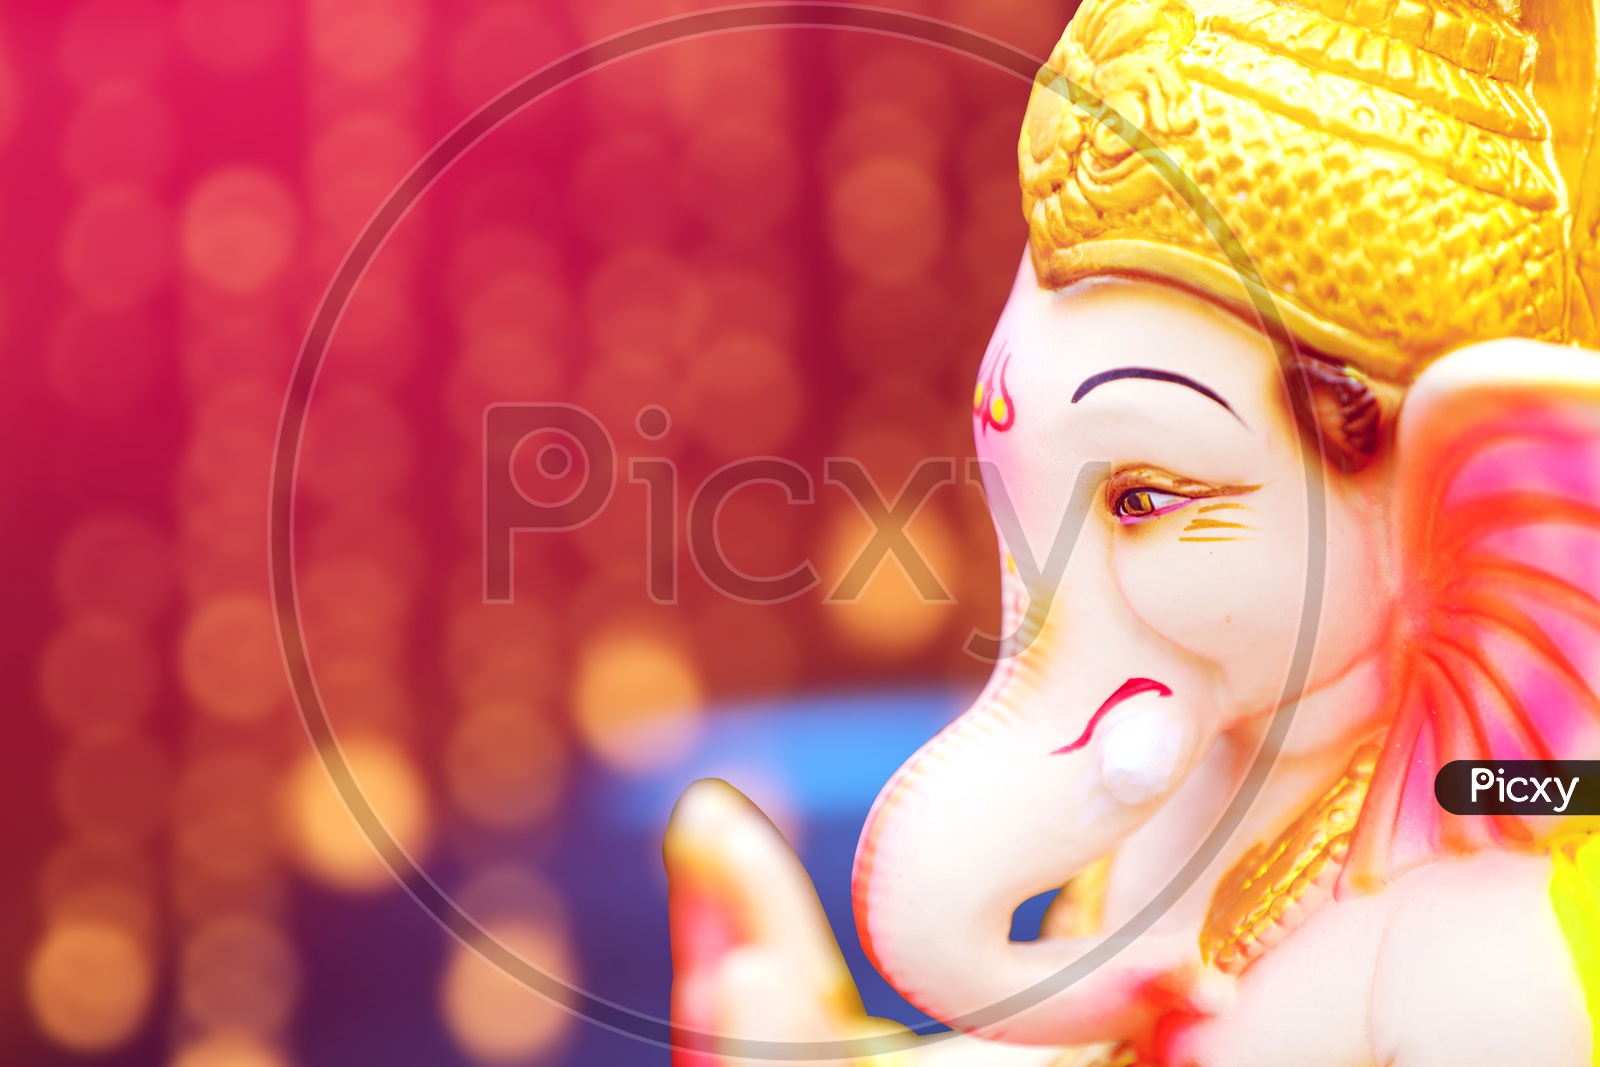 Lord Ganesha Idol with beautiful bokeh background / Ganesh Idol